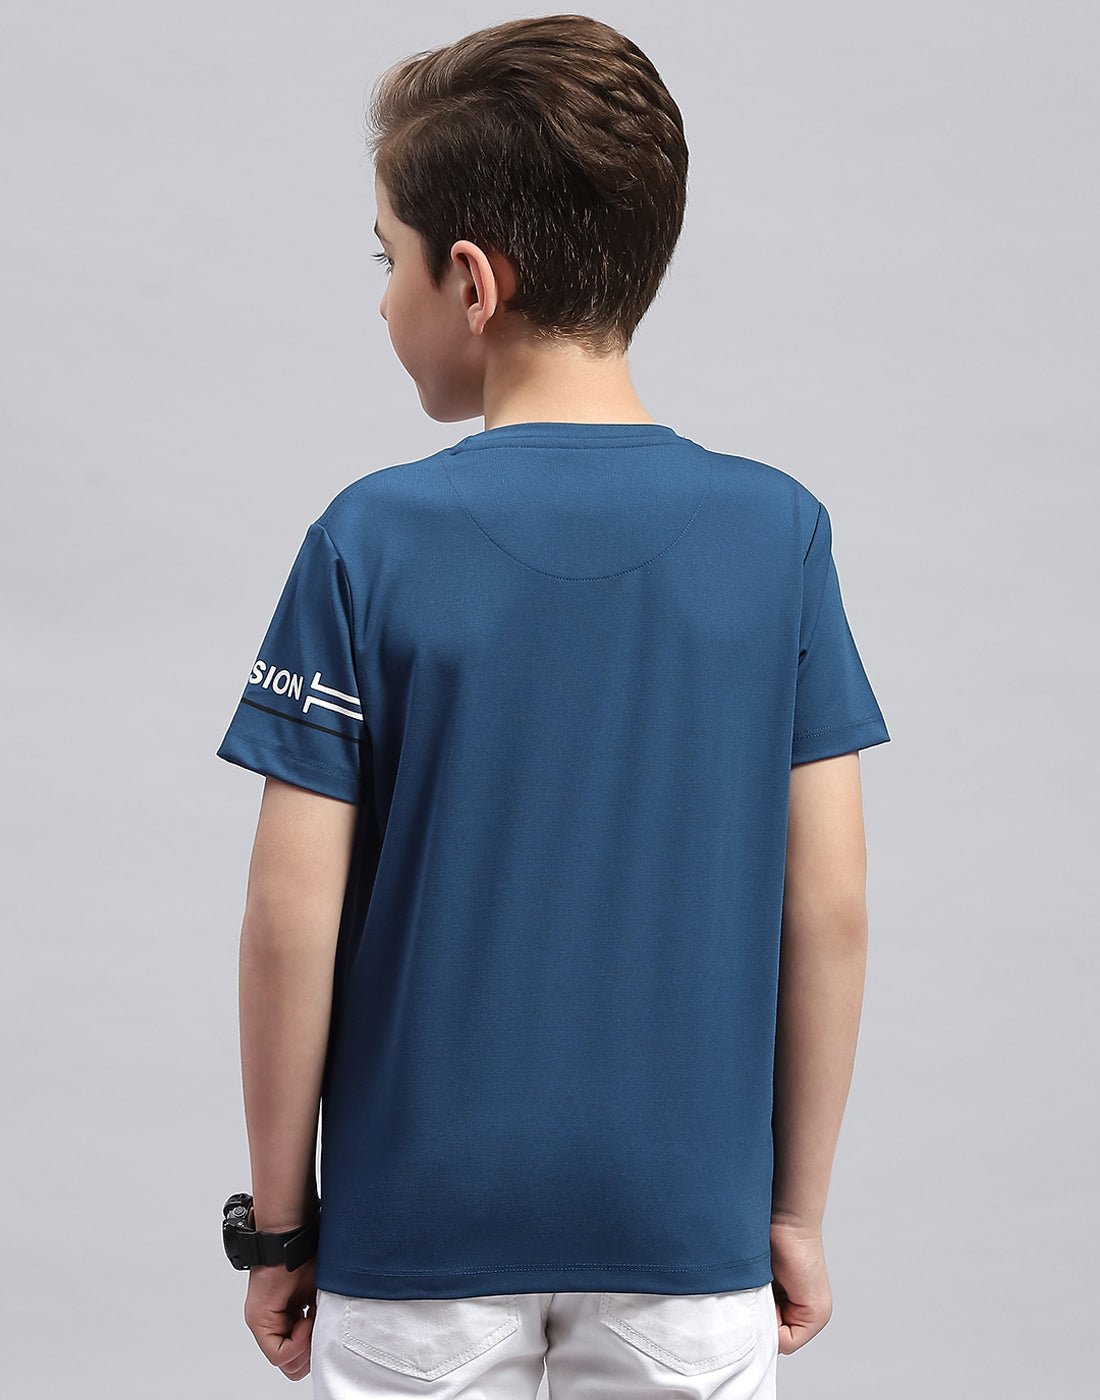 Boys Teal Blue Printed Round Neck Half Sleeve T-Shirt